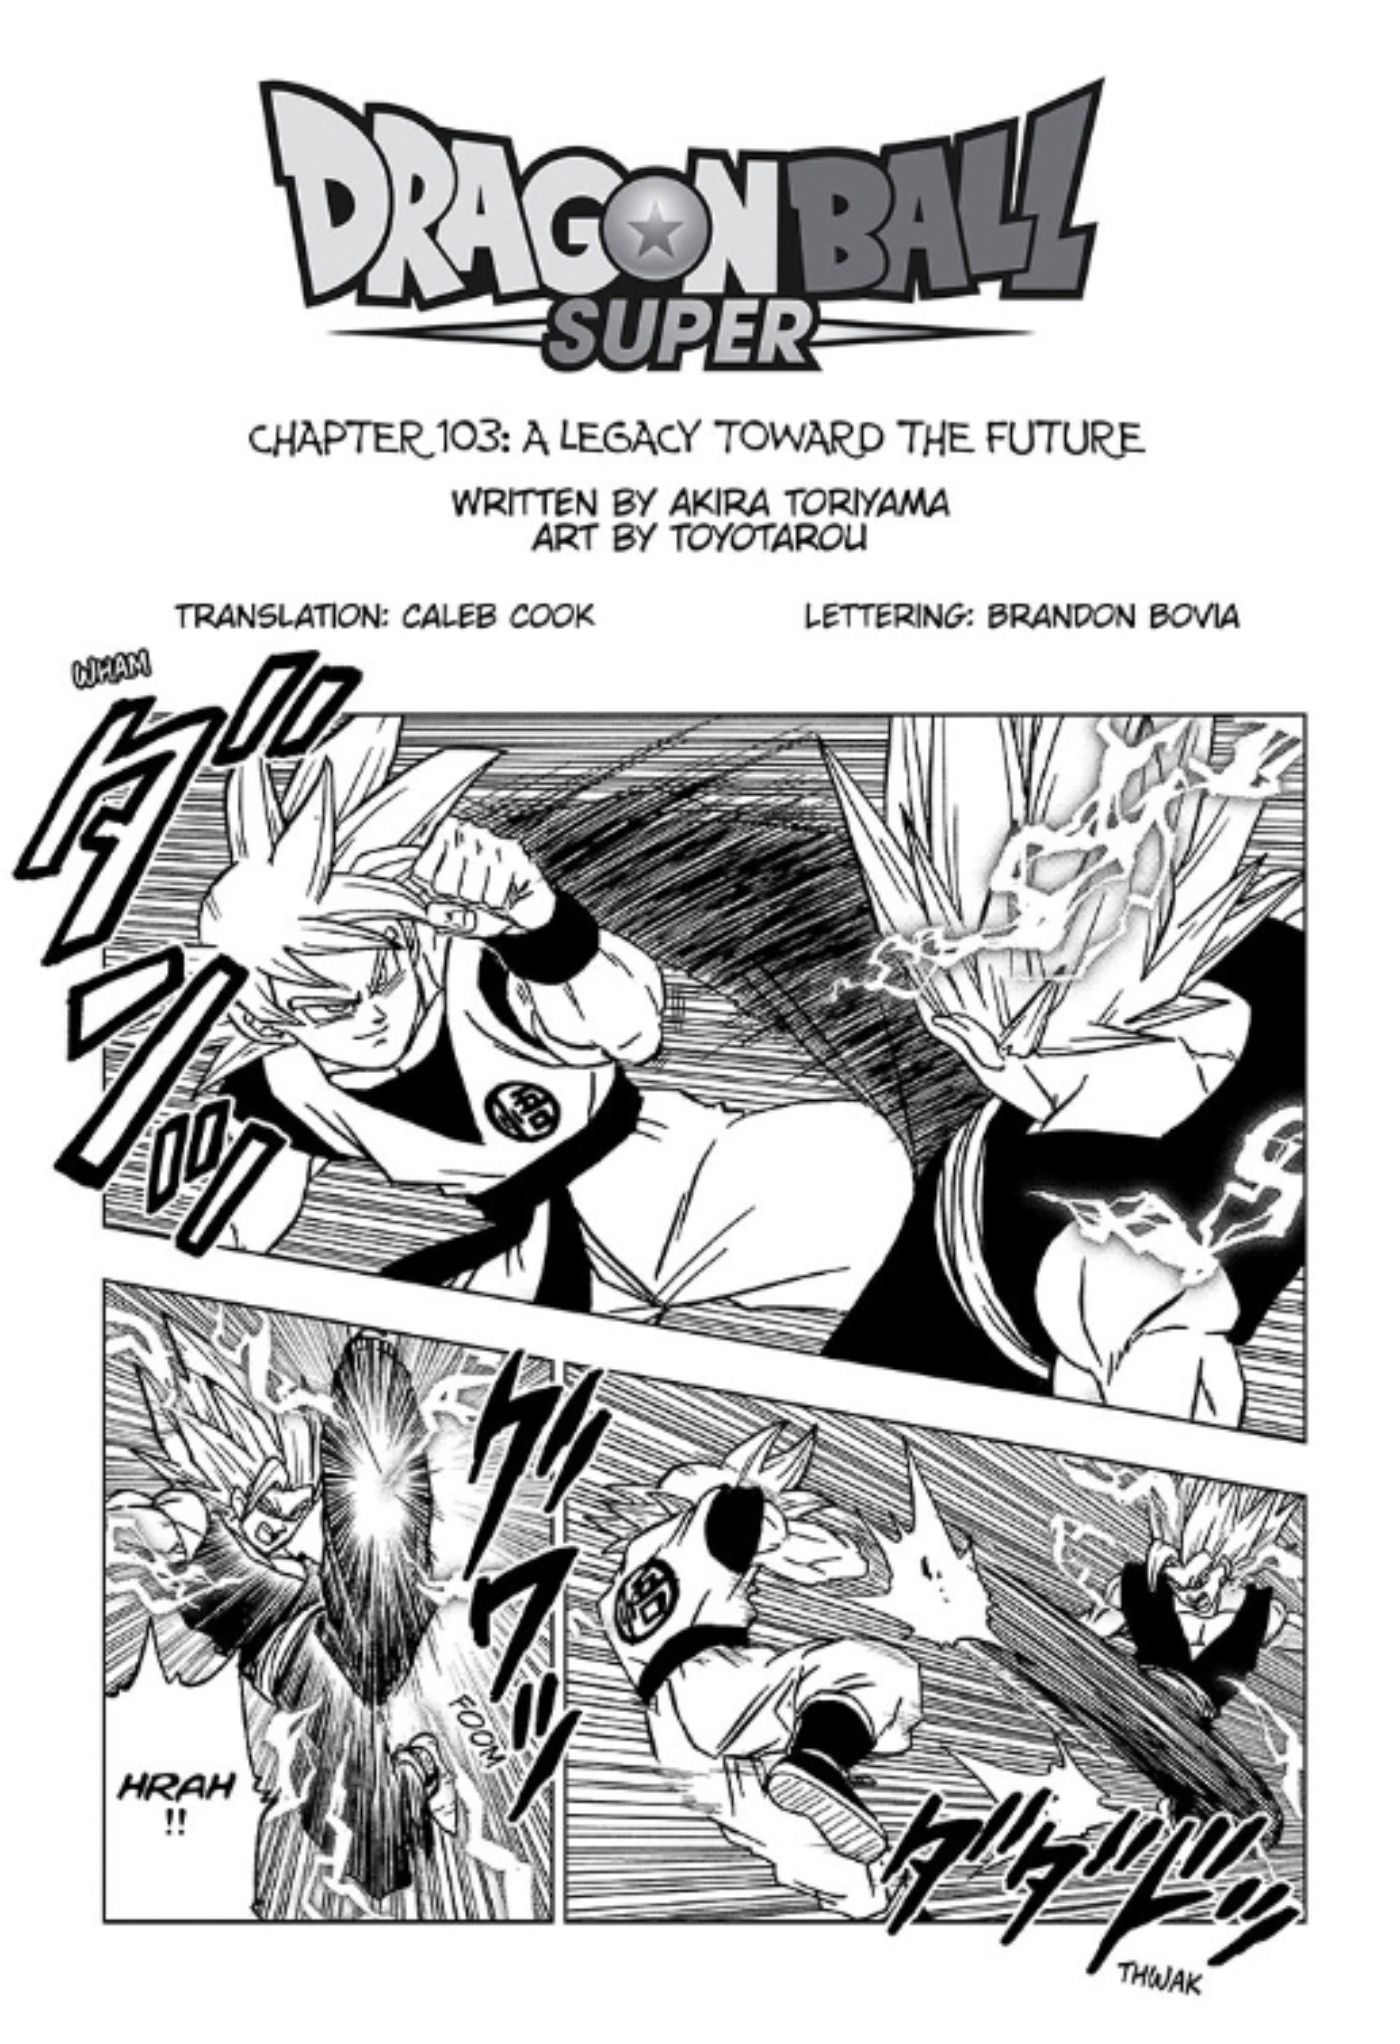 Dragon Ball Super chapter 103 cover featuring Goku vs Gohan.